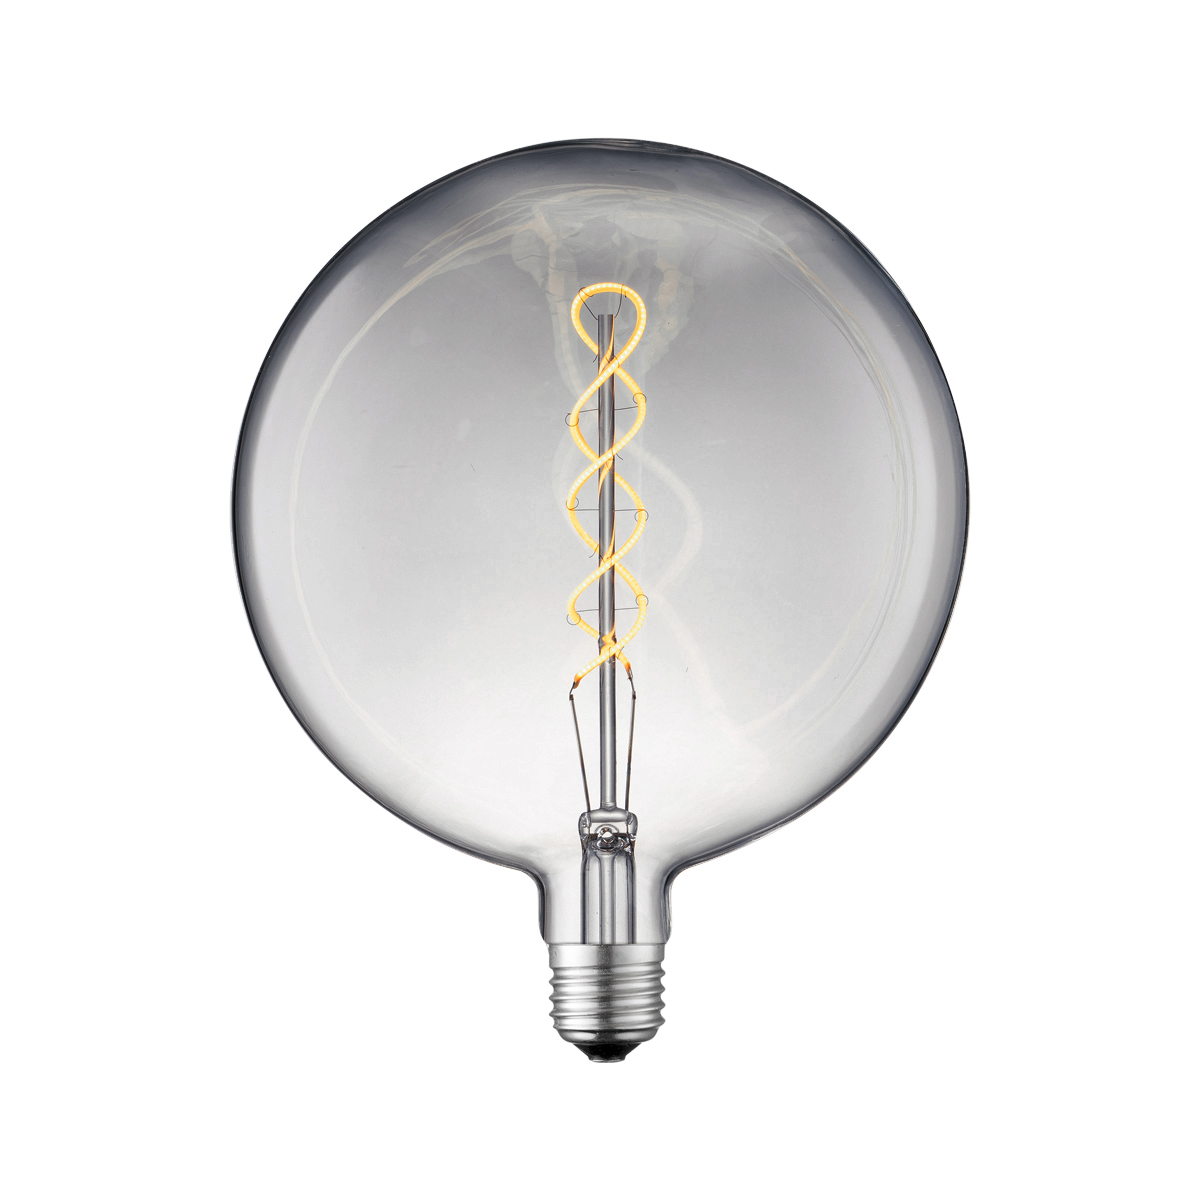 Tangla lighting - TLB-8098-04SM - LED Light Bulb Double Spiral filament - G180 4W smoke - medium - dimmabel - E27